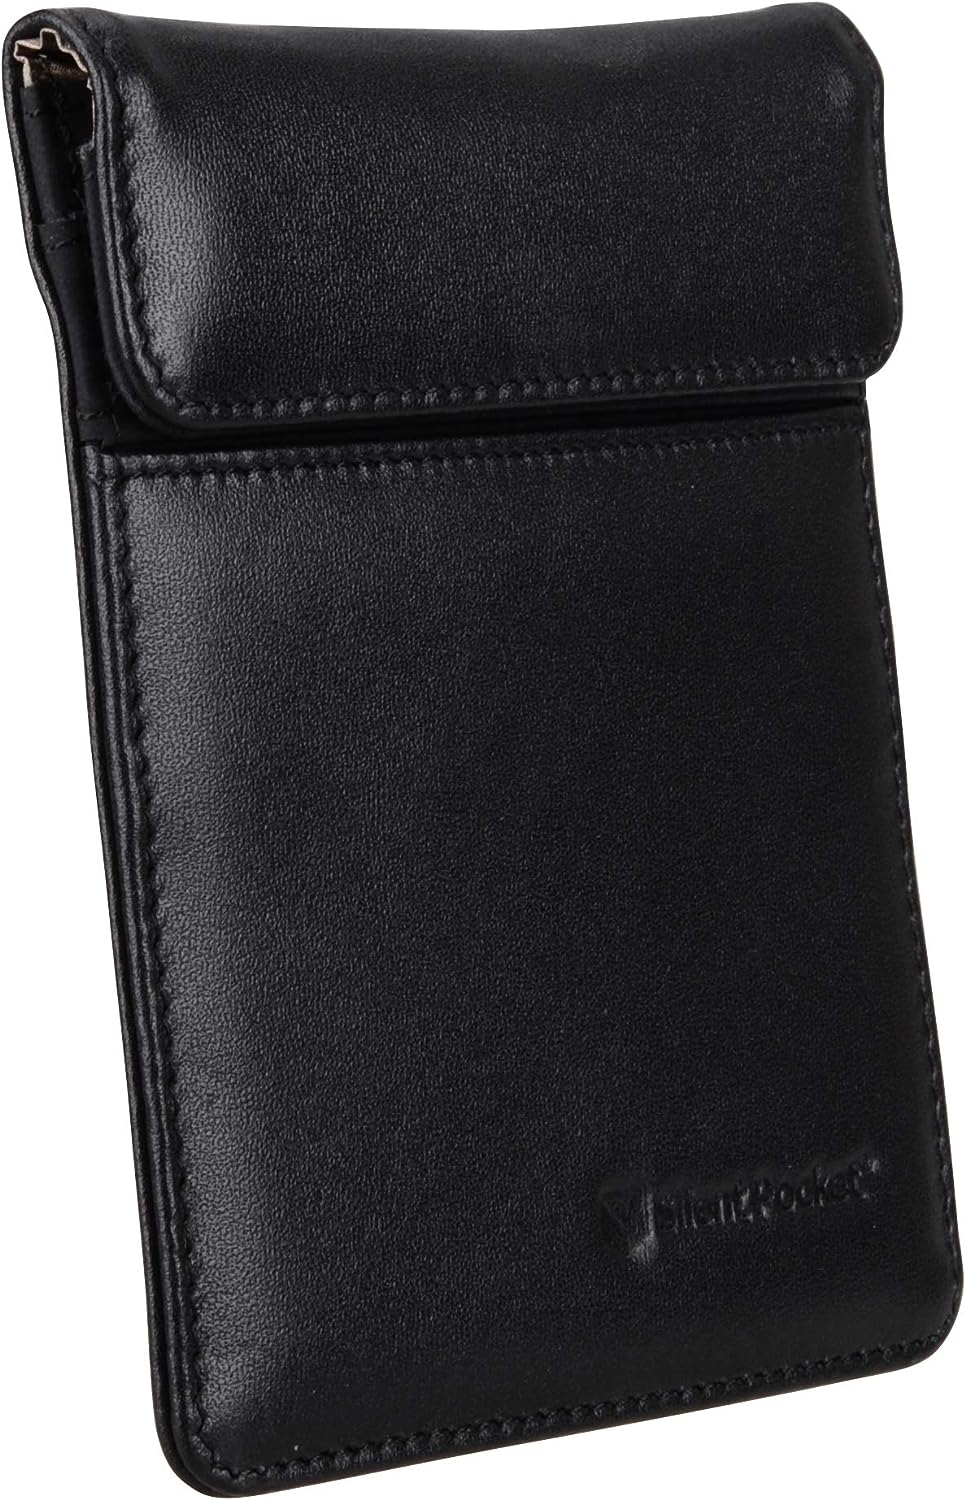 SLNT Pocket Faraday Bag, Phone